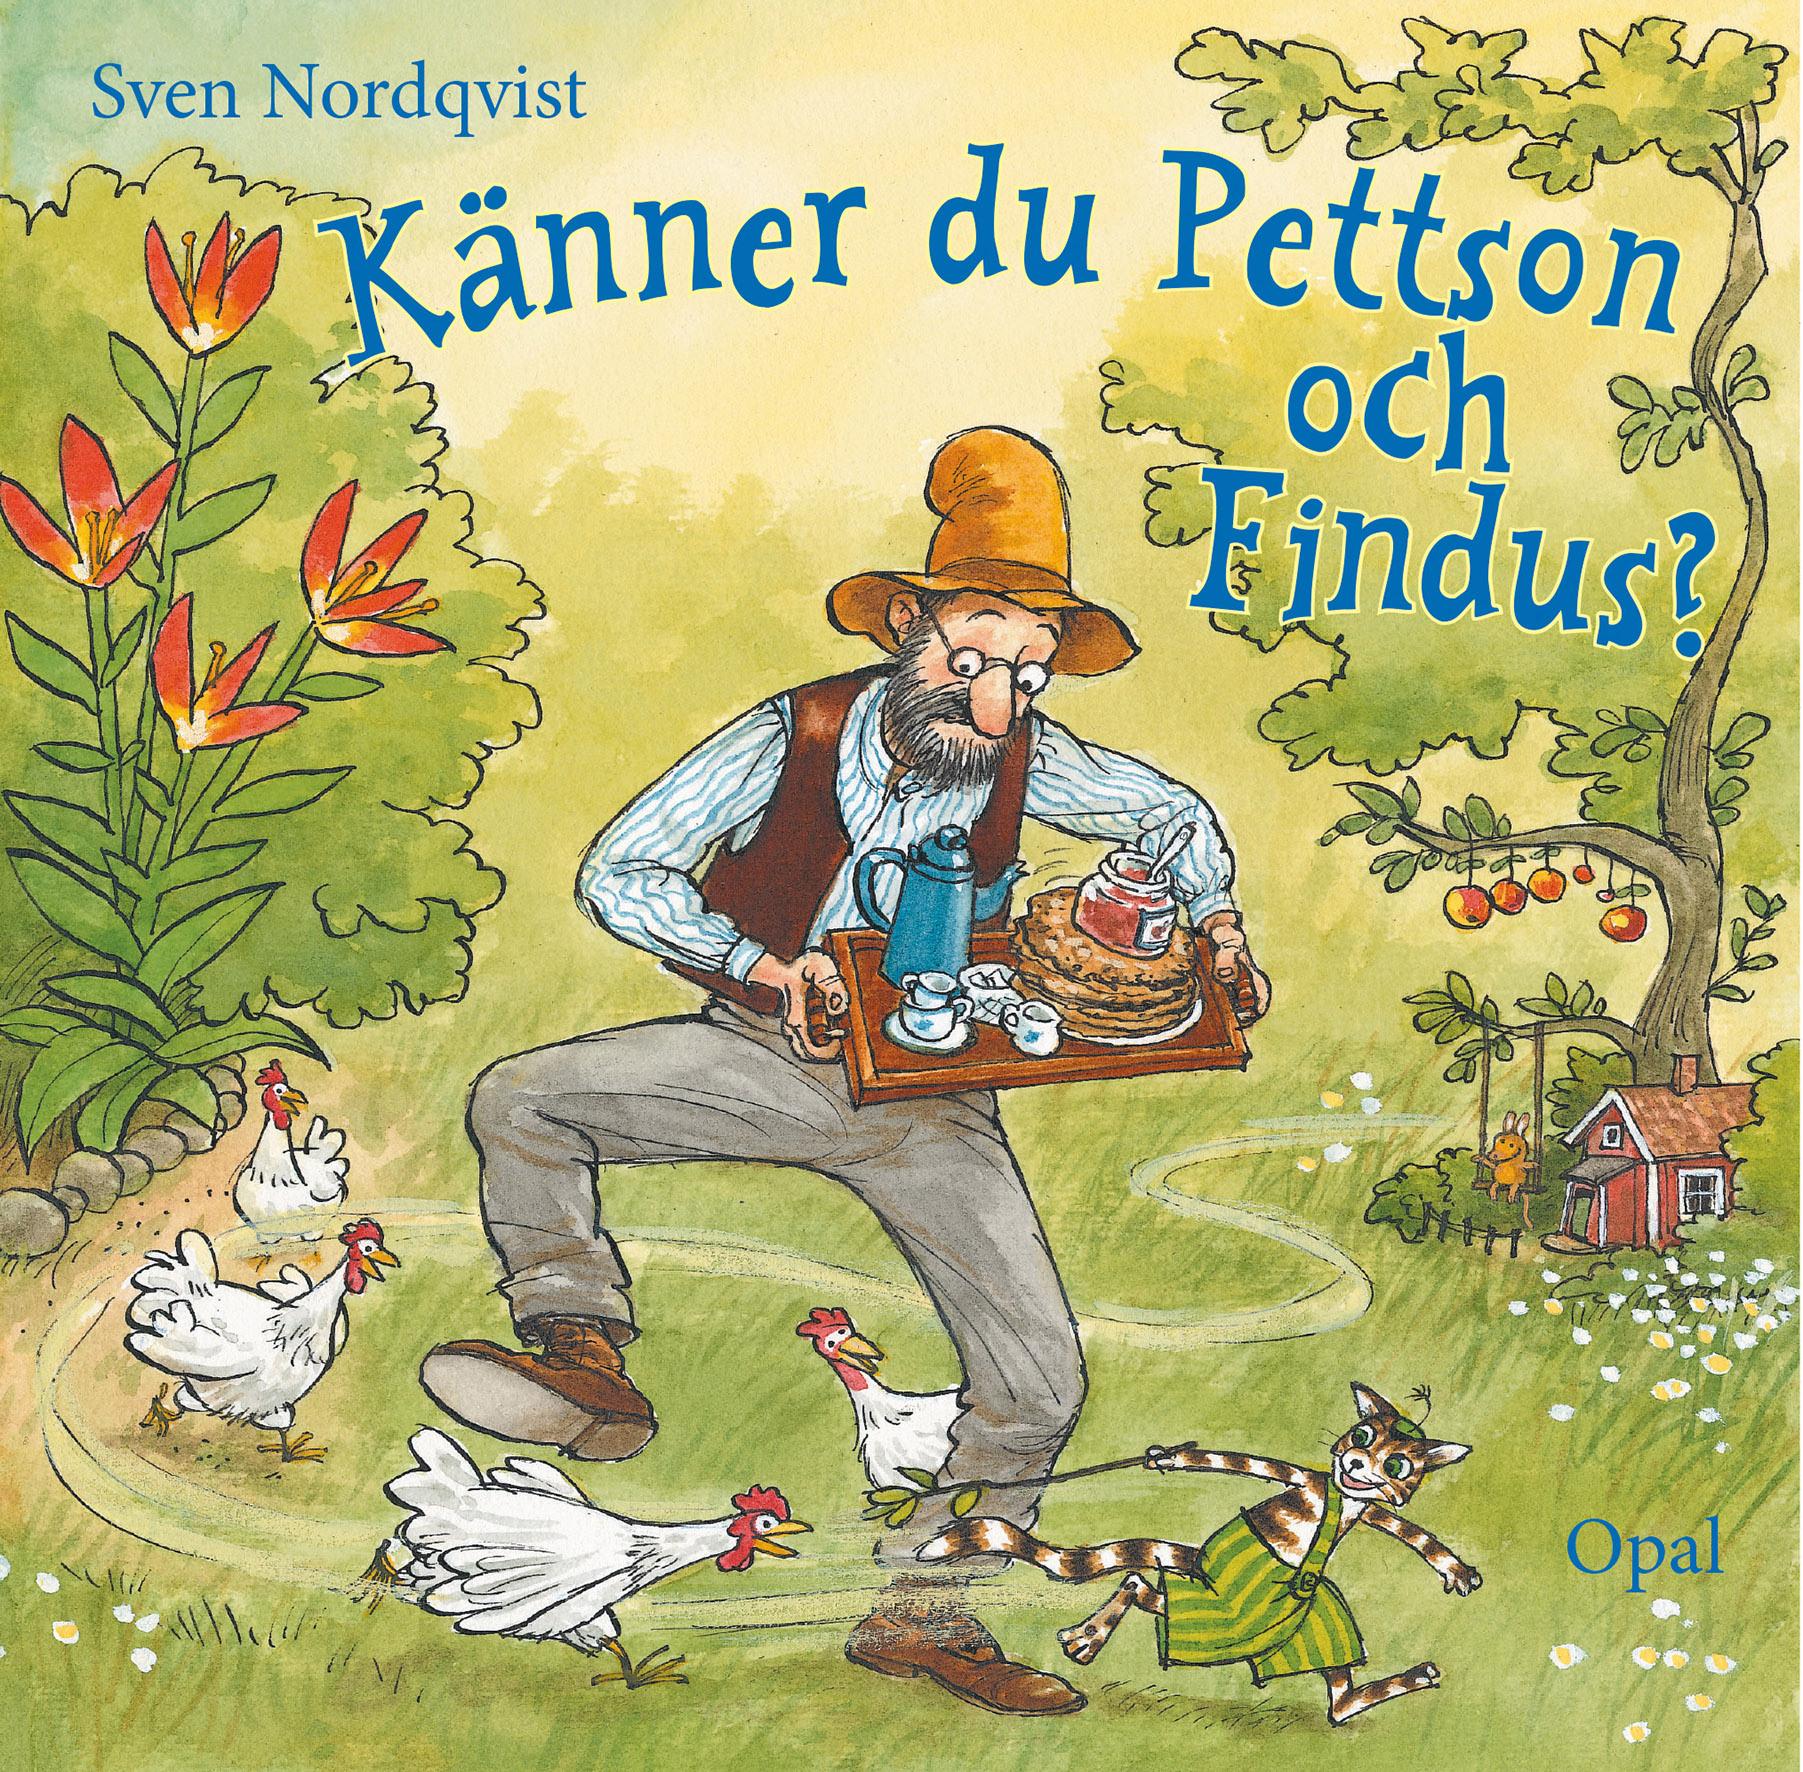 Обложка книги из серии про Петсона и Финдуса